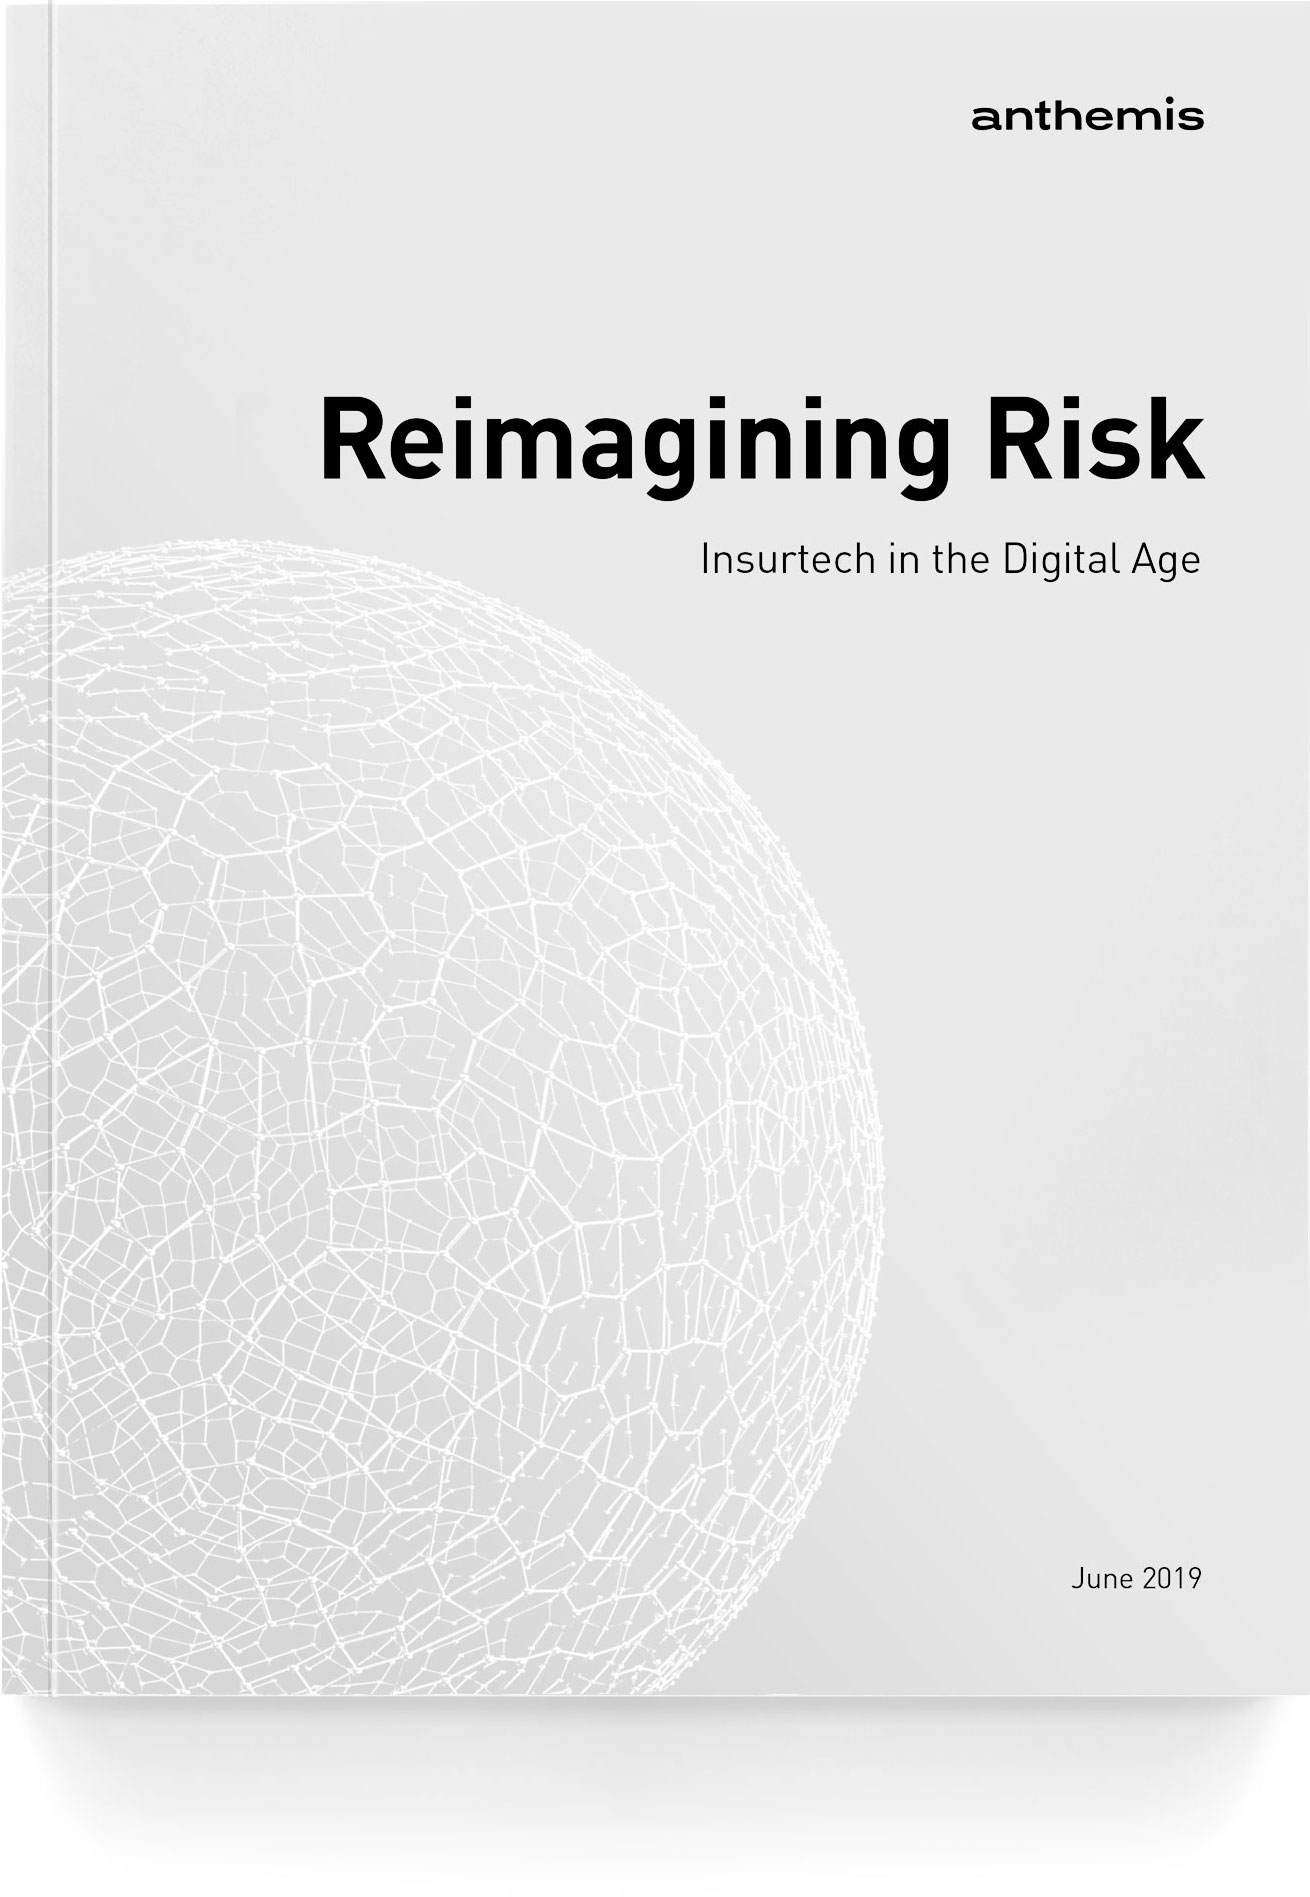 reimagining-risk-insurtech-in-the-digital-age-june-2019-cover-v2